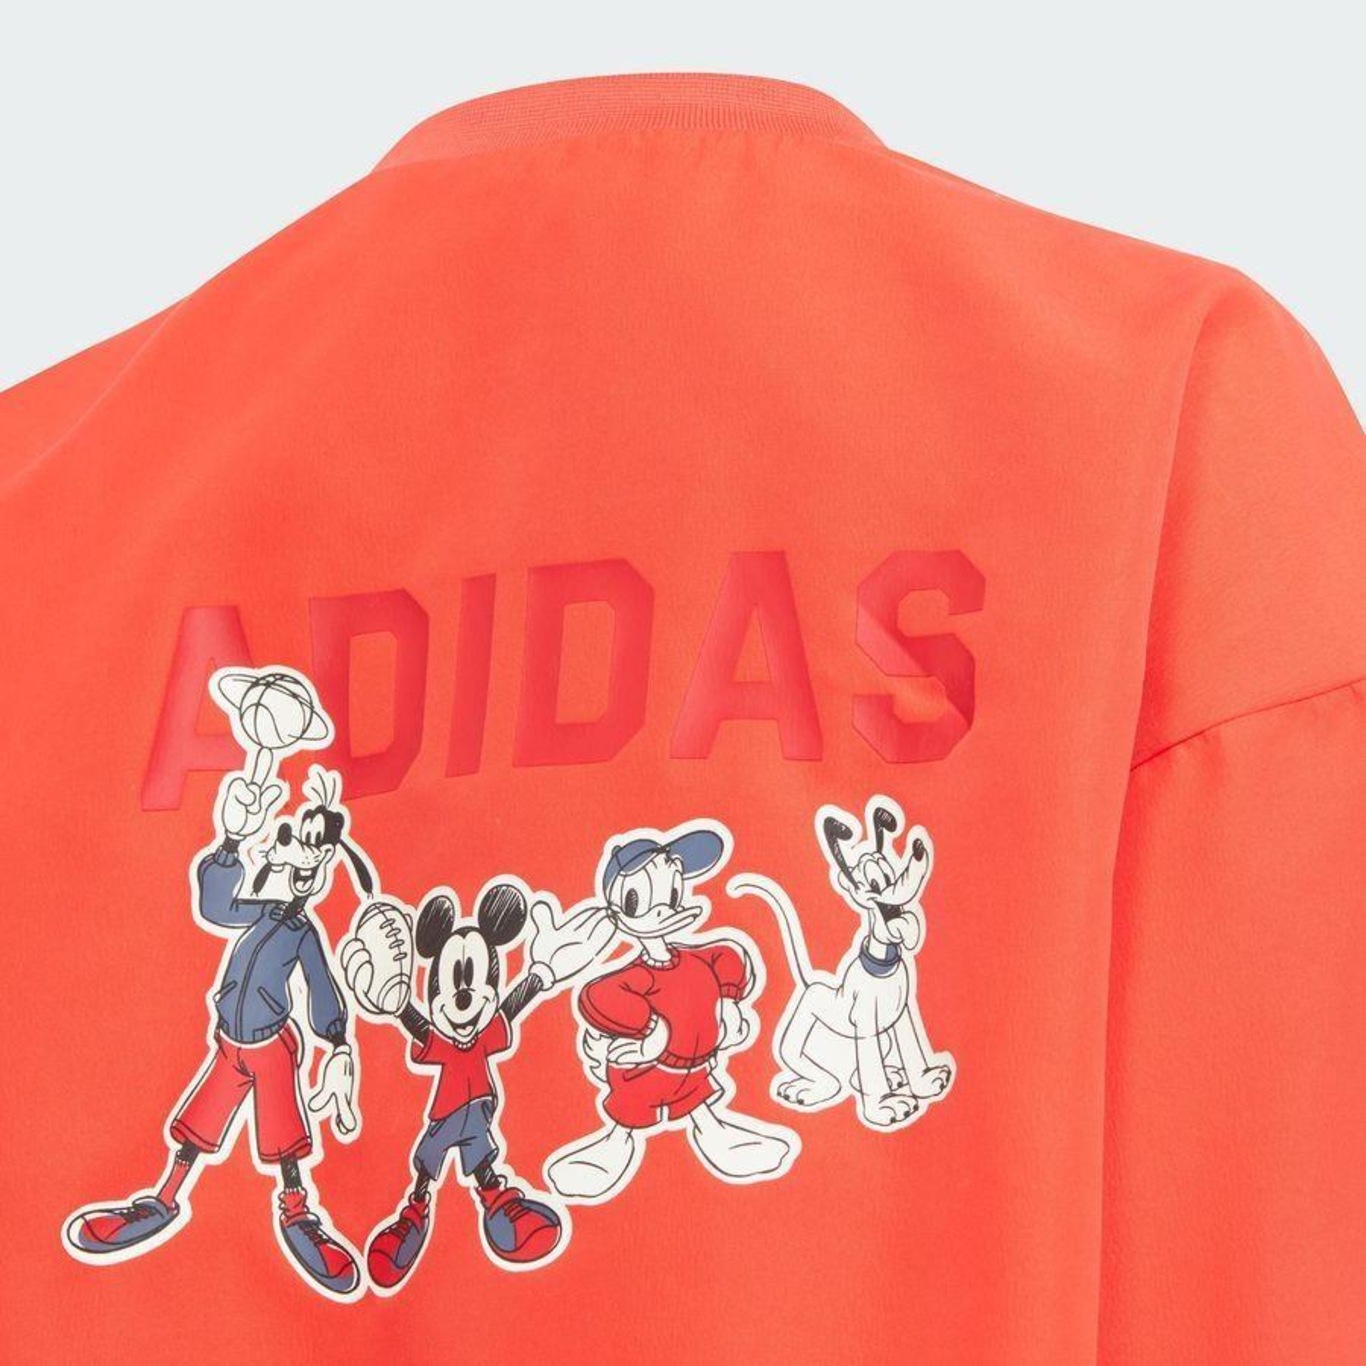 adidas adidas x Disney Mickey Mouse Crewneck and Jogger Set - Red